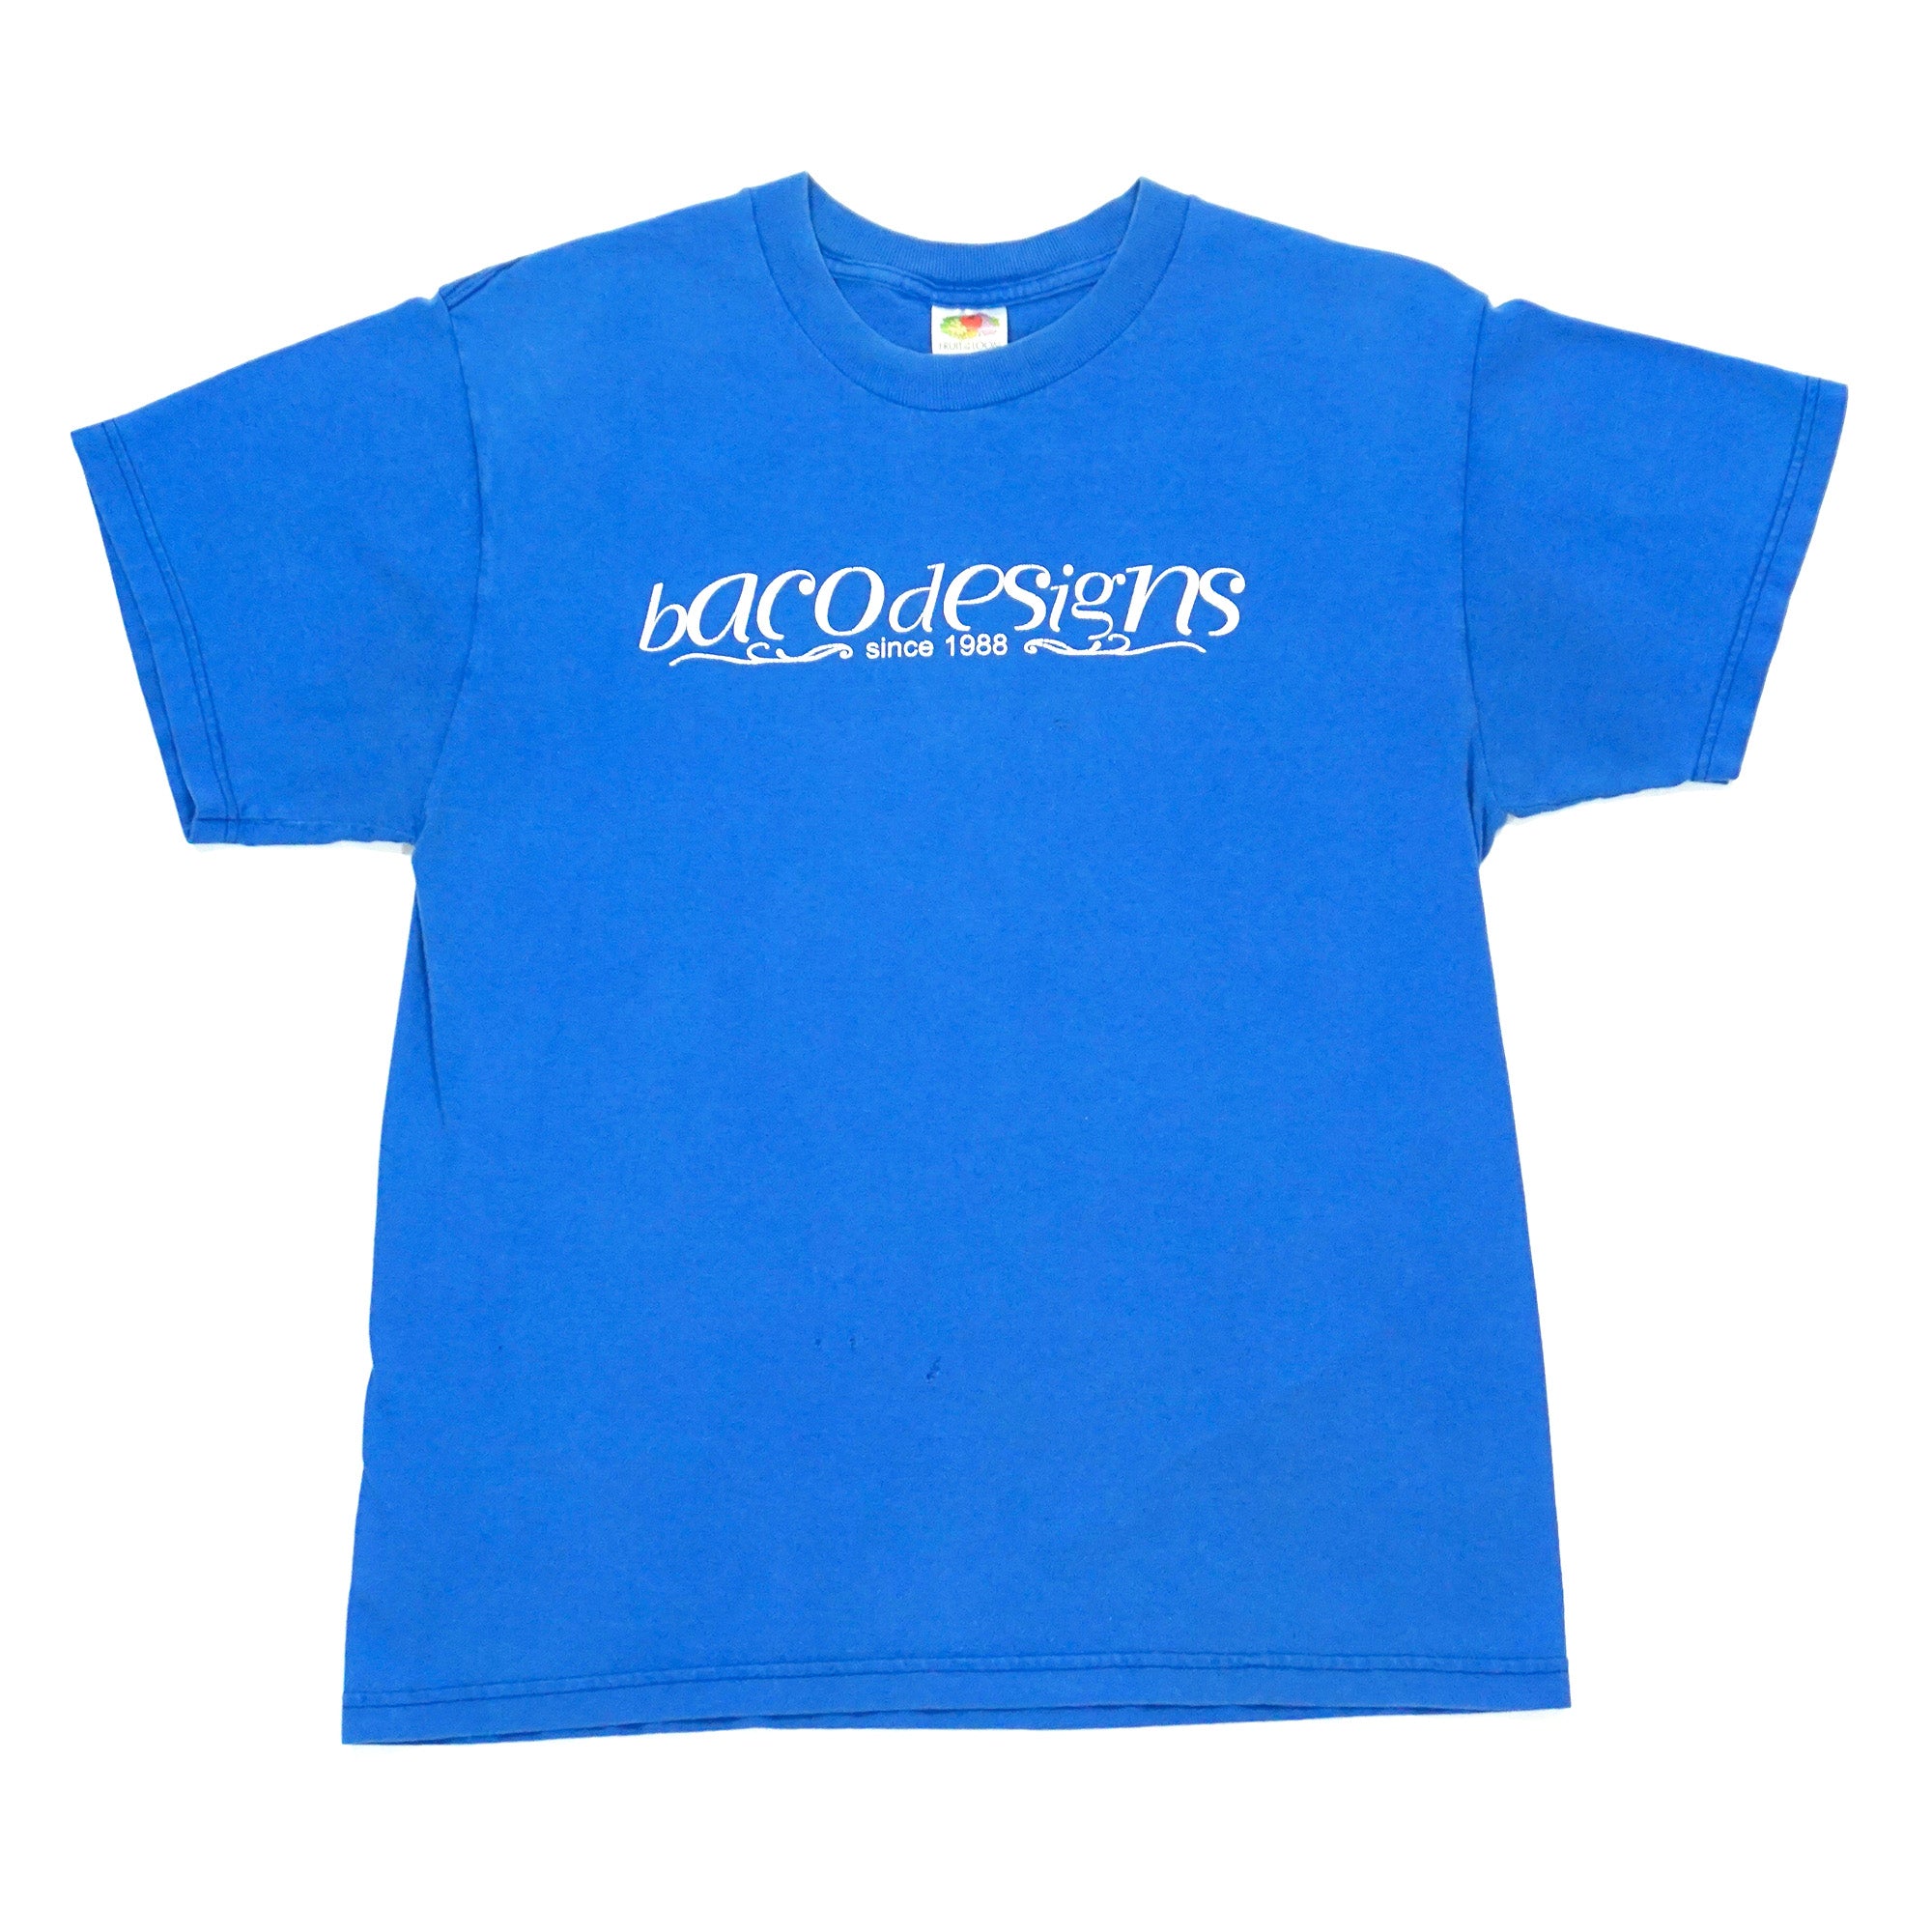 Baco Designs - Since 1988 Shirt (L)